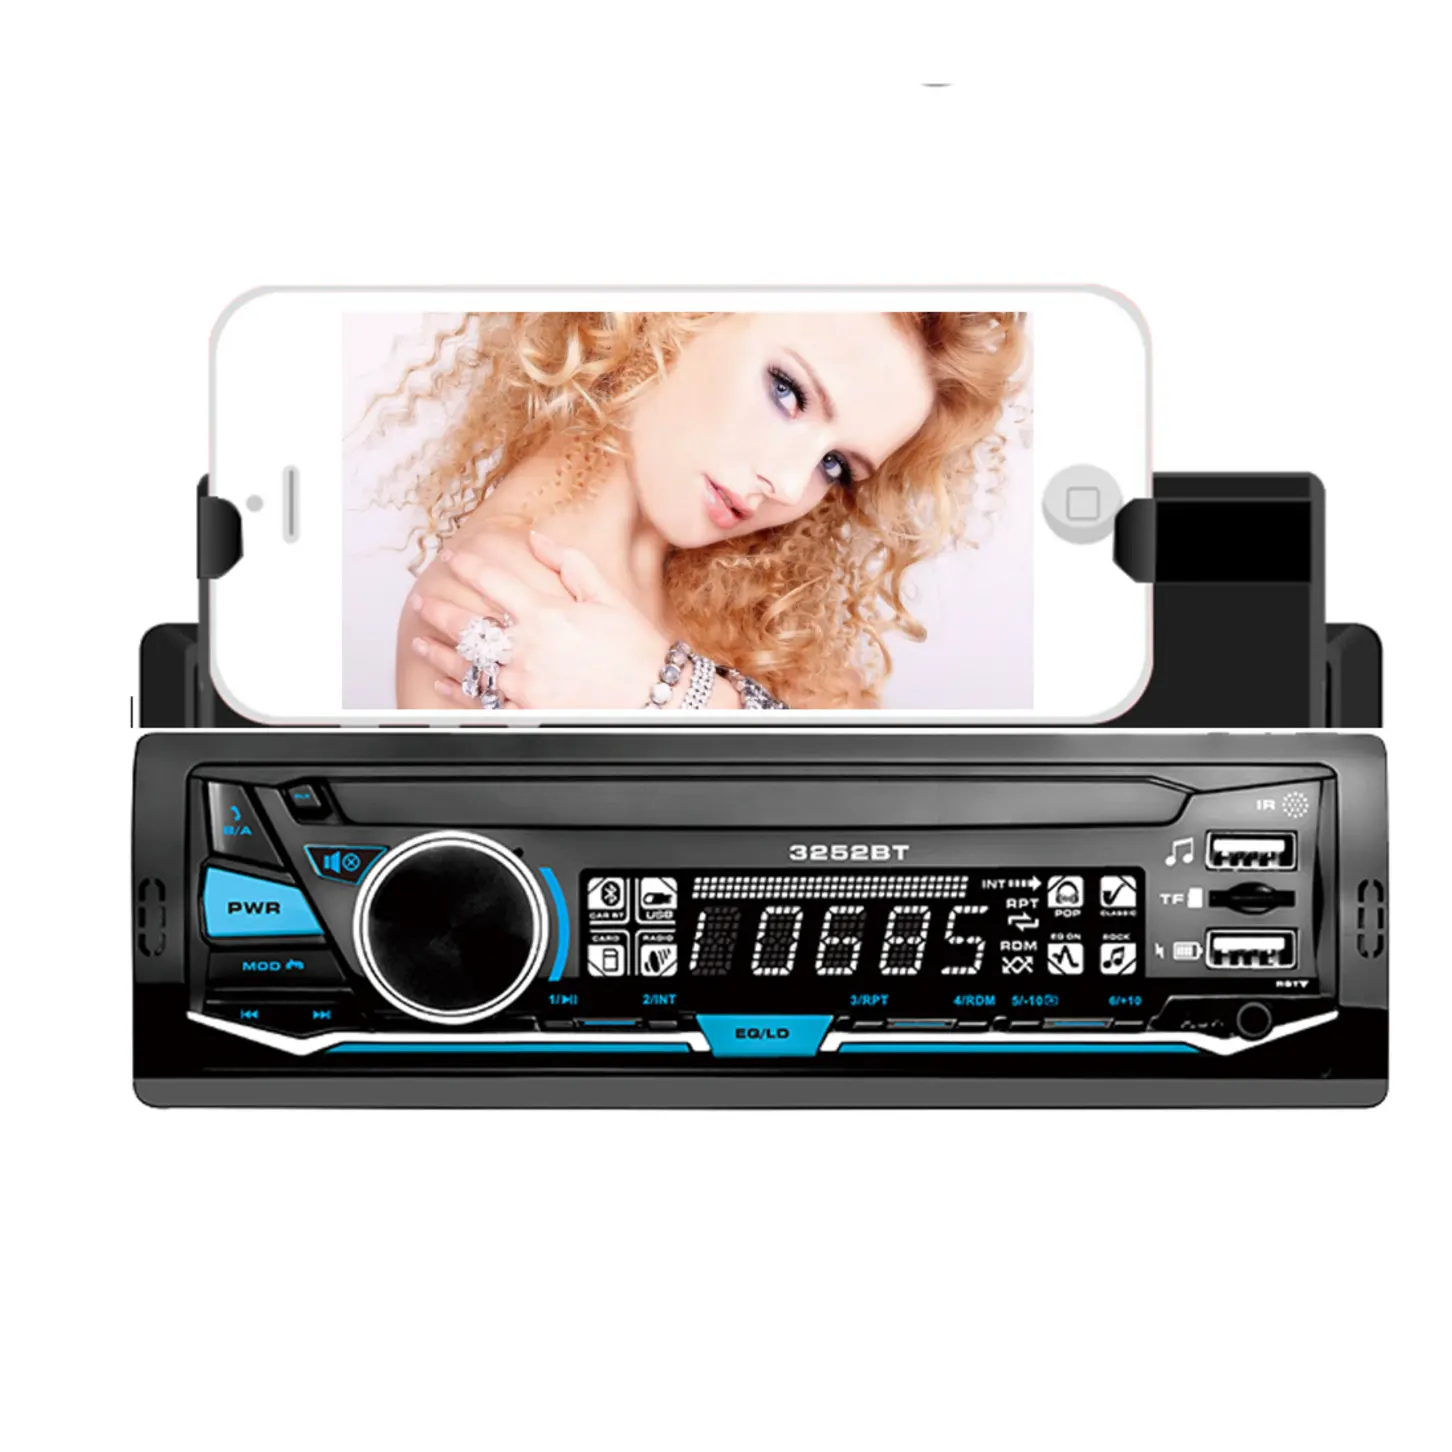 Auto Radio Mp3 Usb Speler Met Bluetooth Touch Screen Display Sd Pc Interface Mobiele Telefoon Houder Ondersteunt Wma Audio Formaat